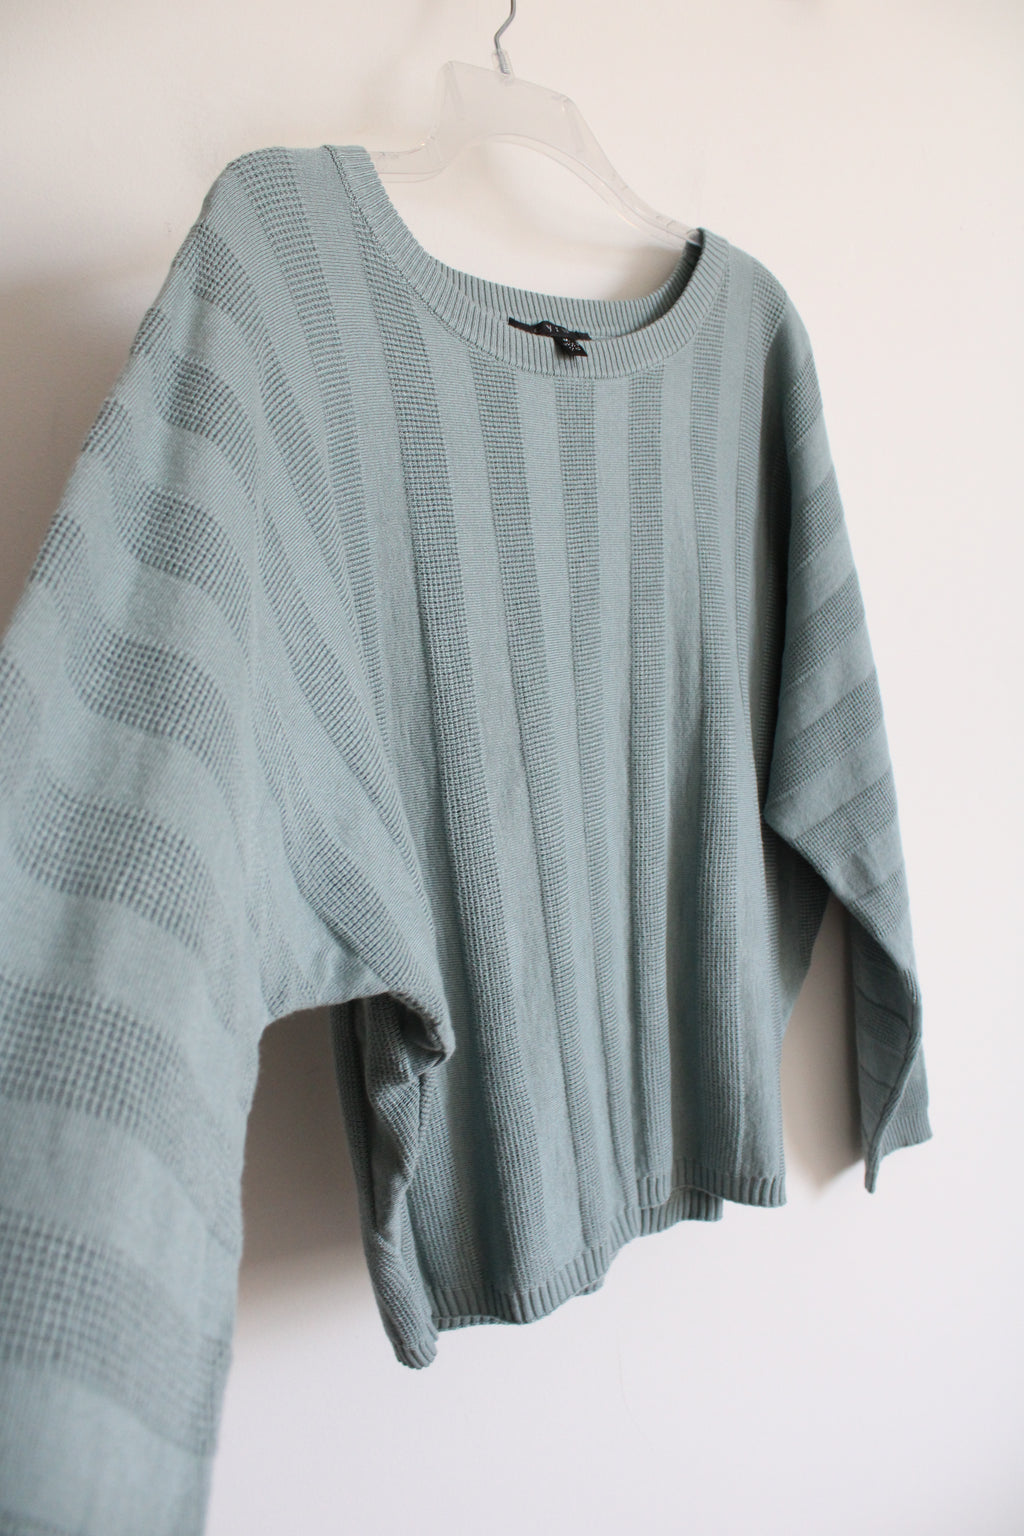 Cyrus Blue Green Knit Sweater | M